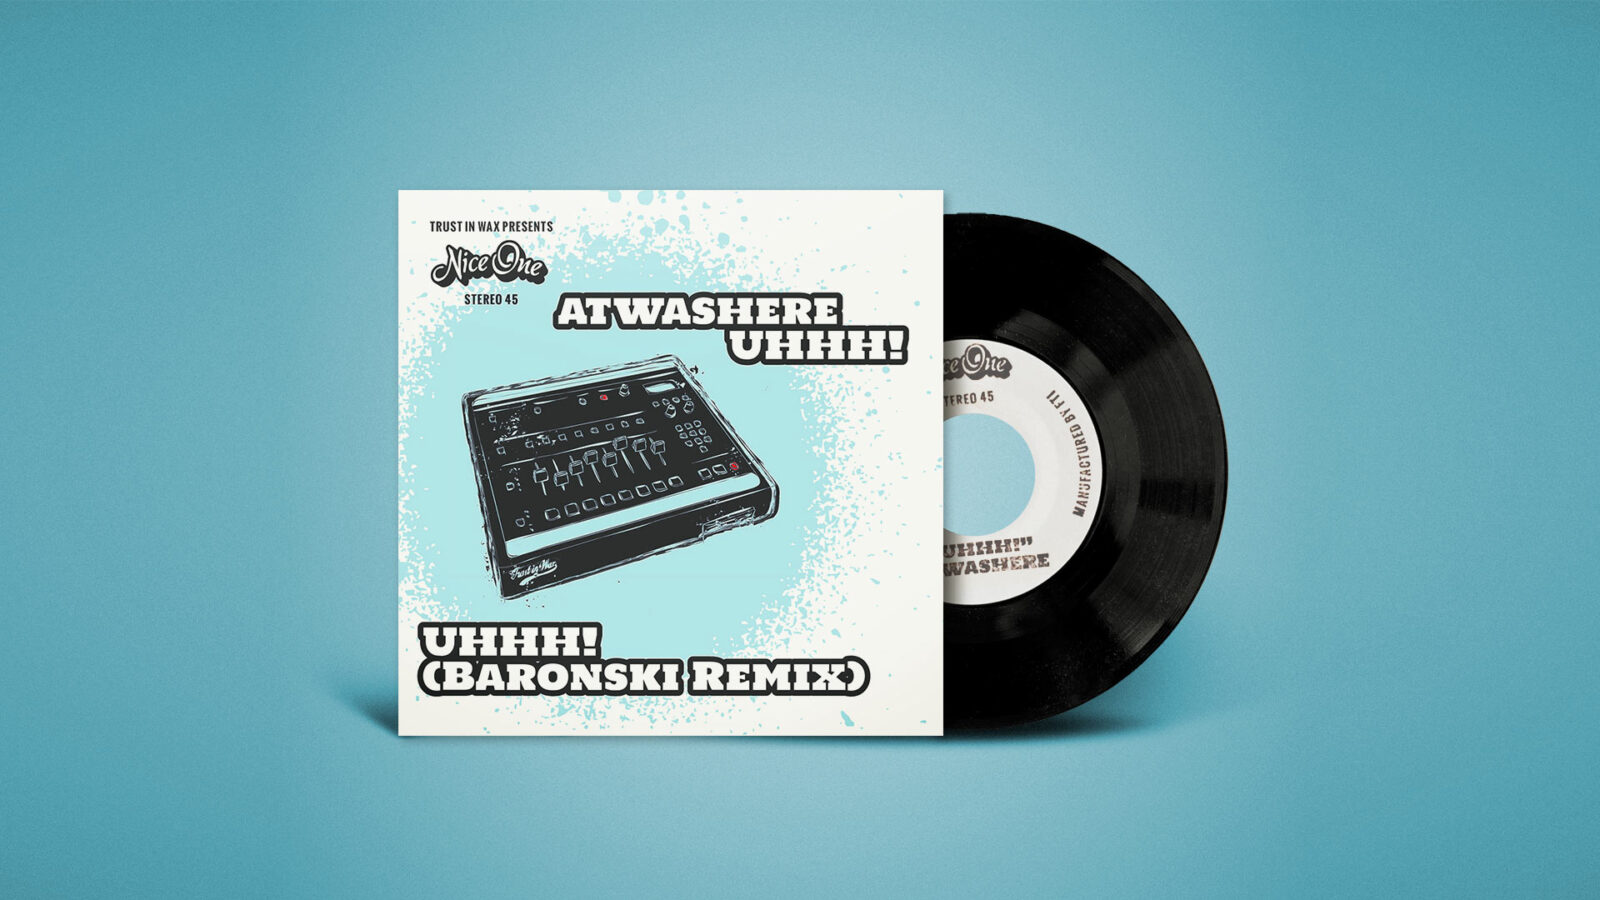 Atwashere “Uhhh!” (+ Baronski Remix) Vinyl 7